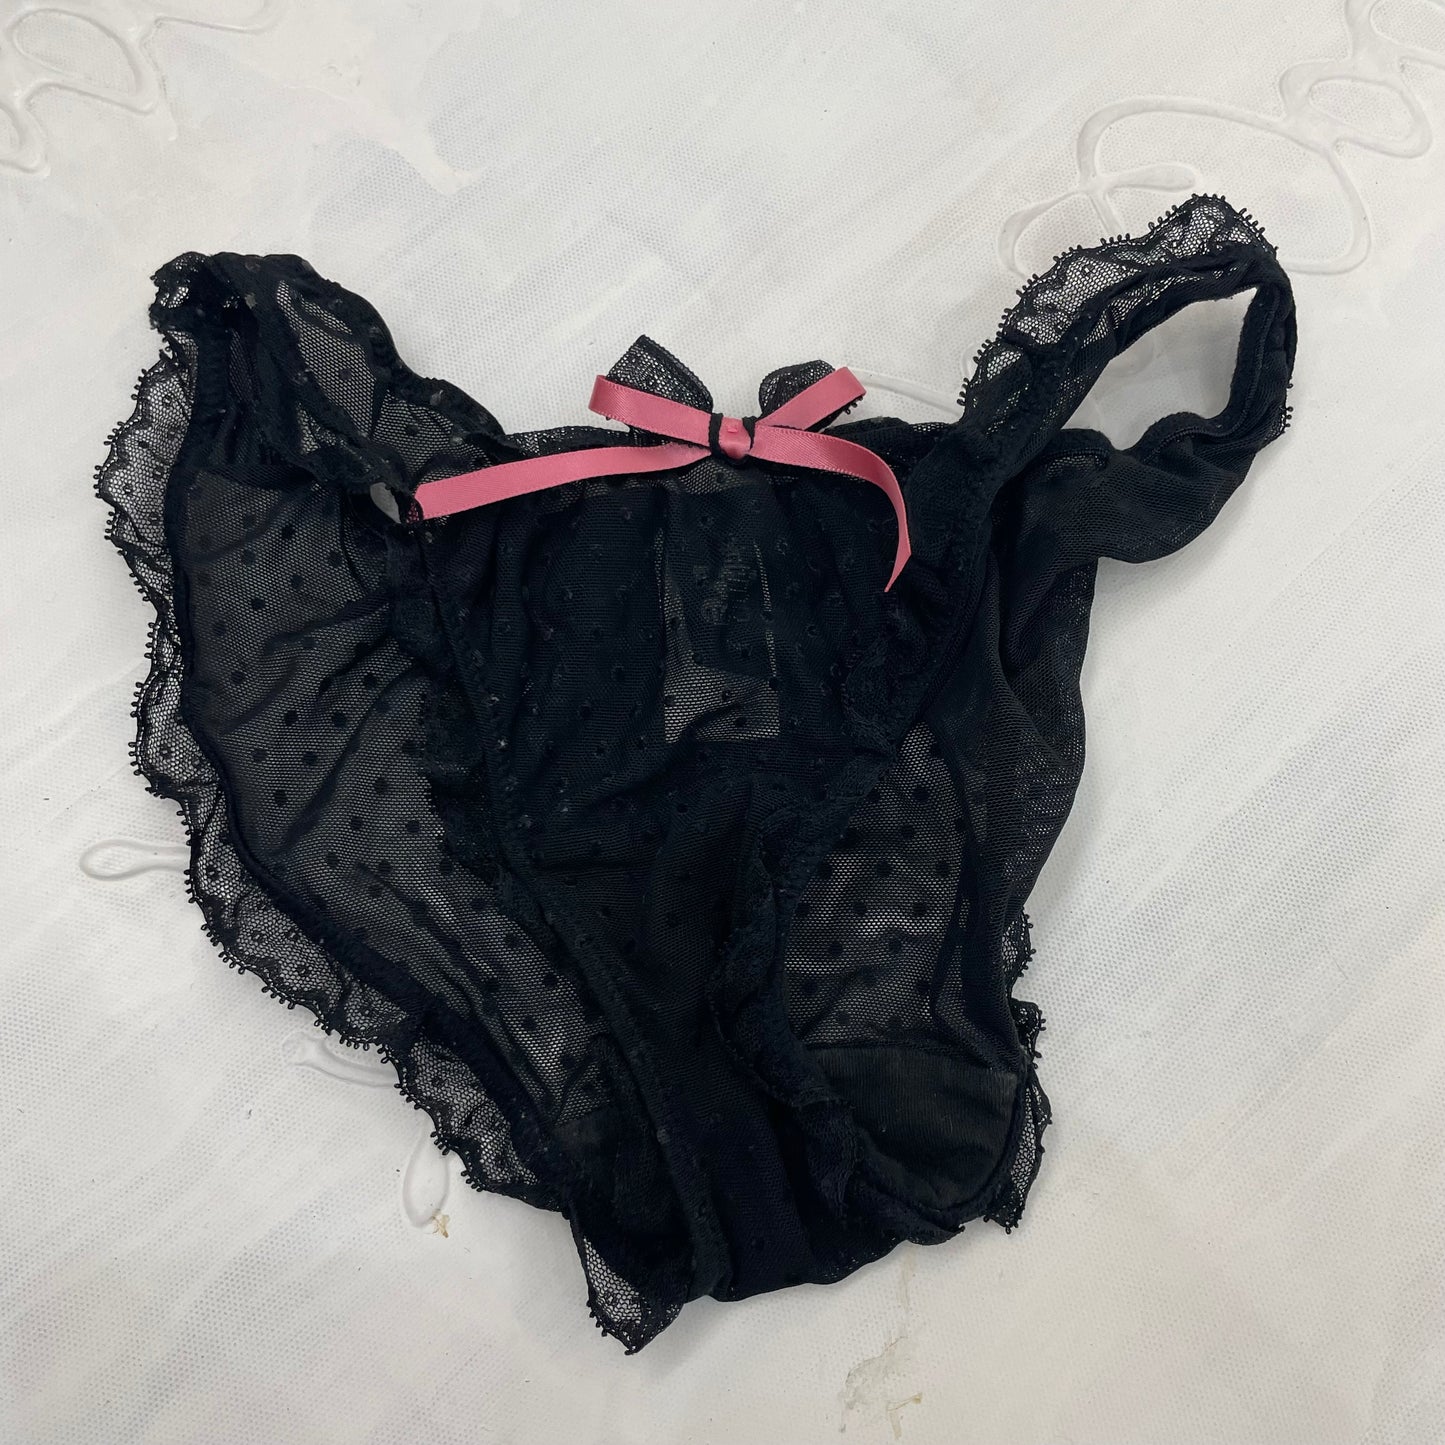 GALENTINES DAY DROP | medium black mesh polka dot underwear with pink bow